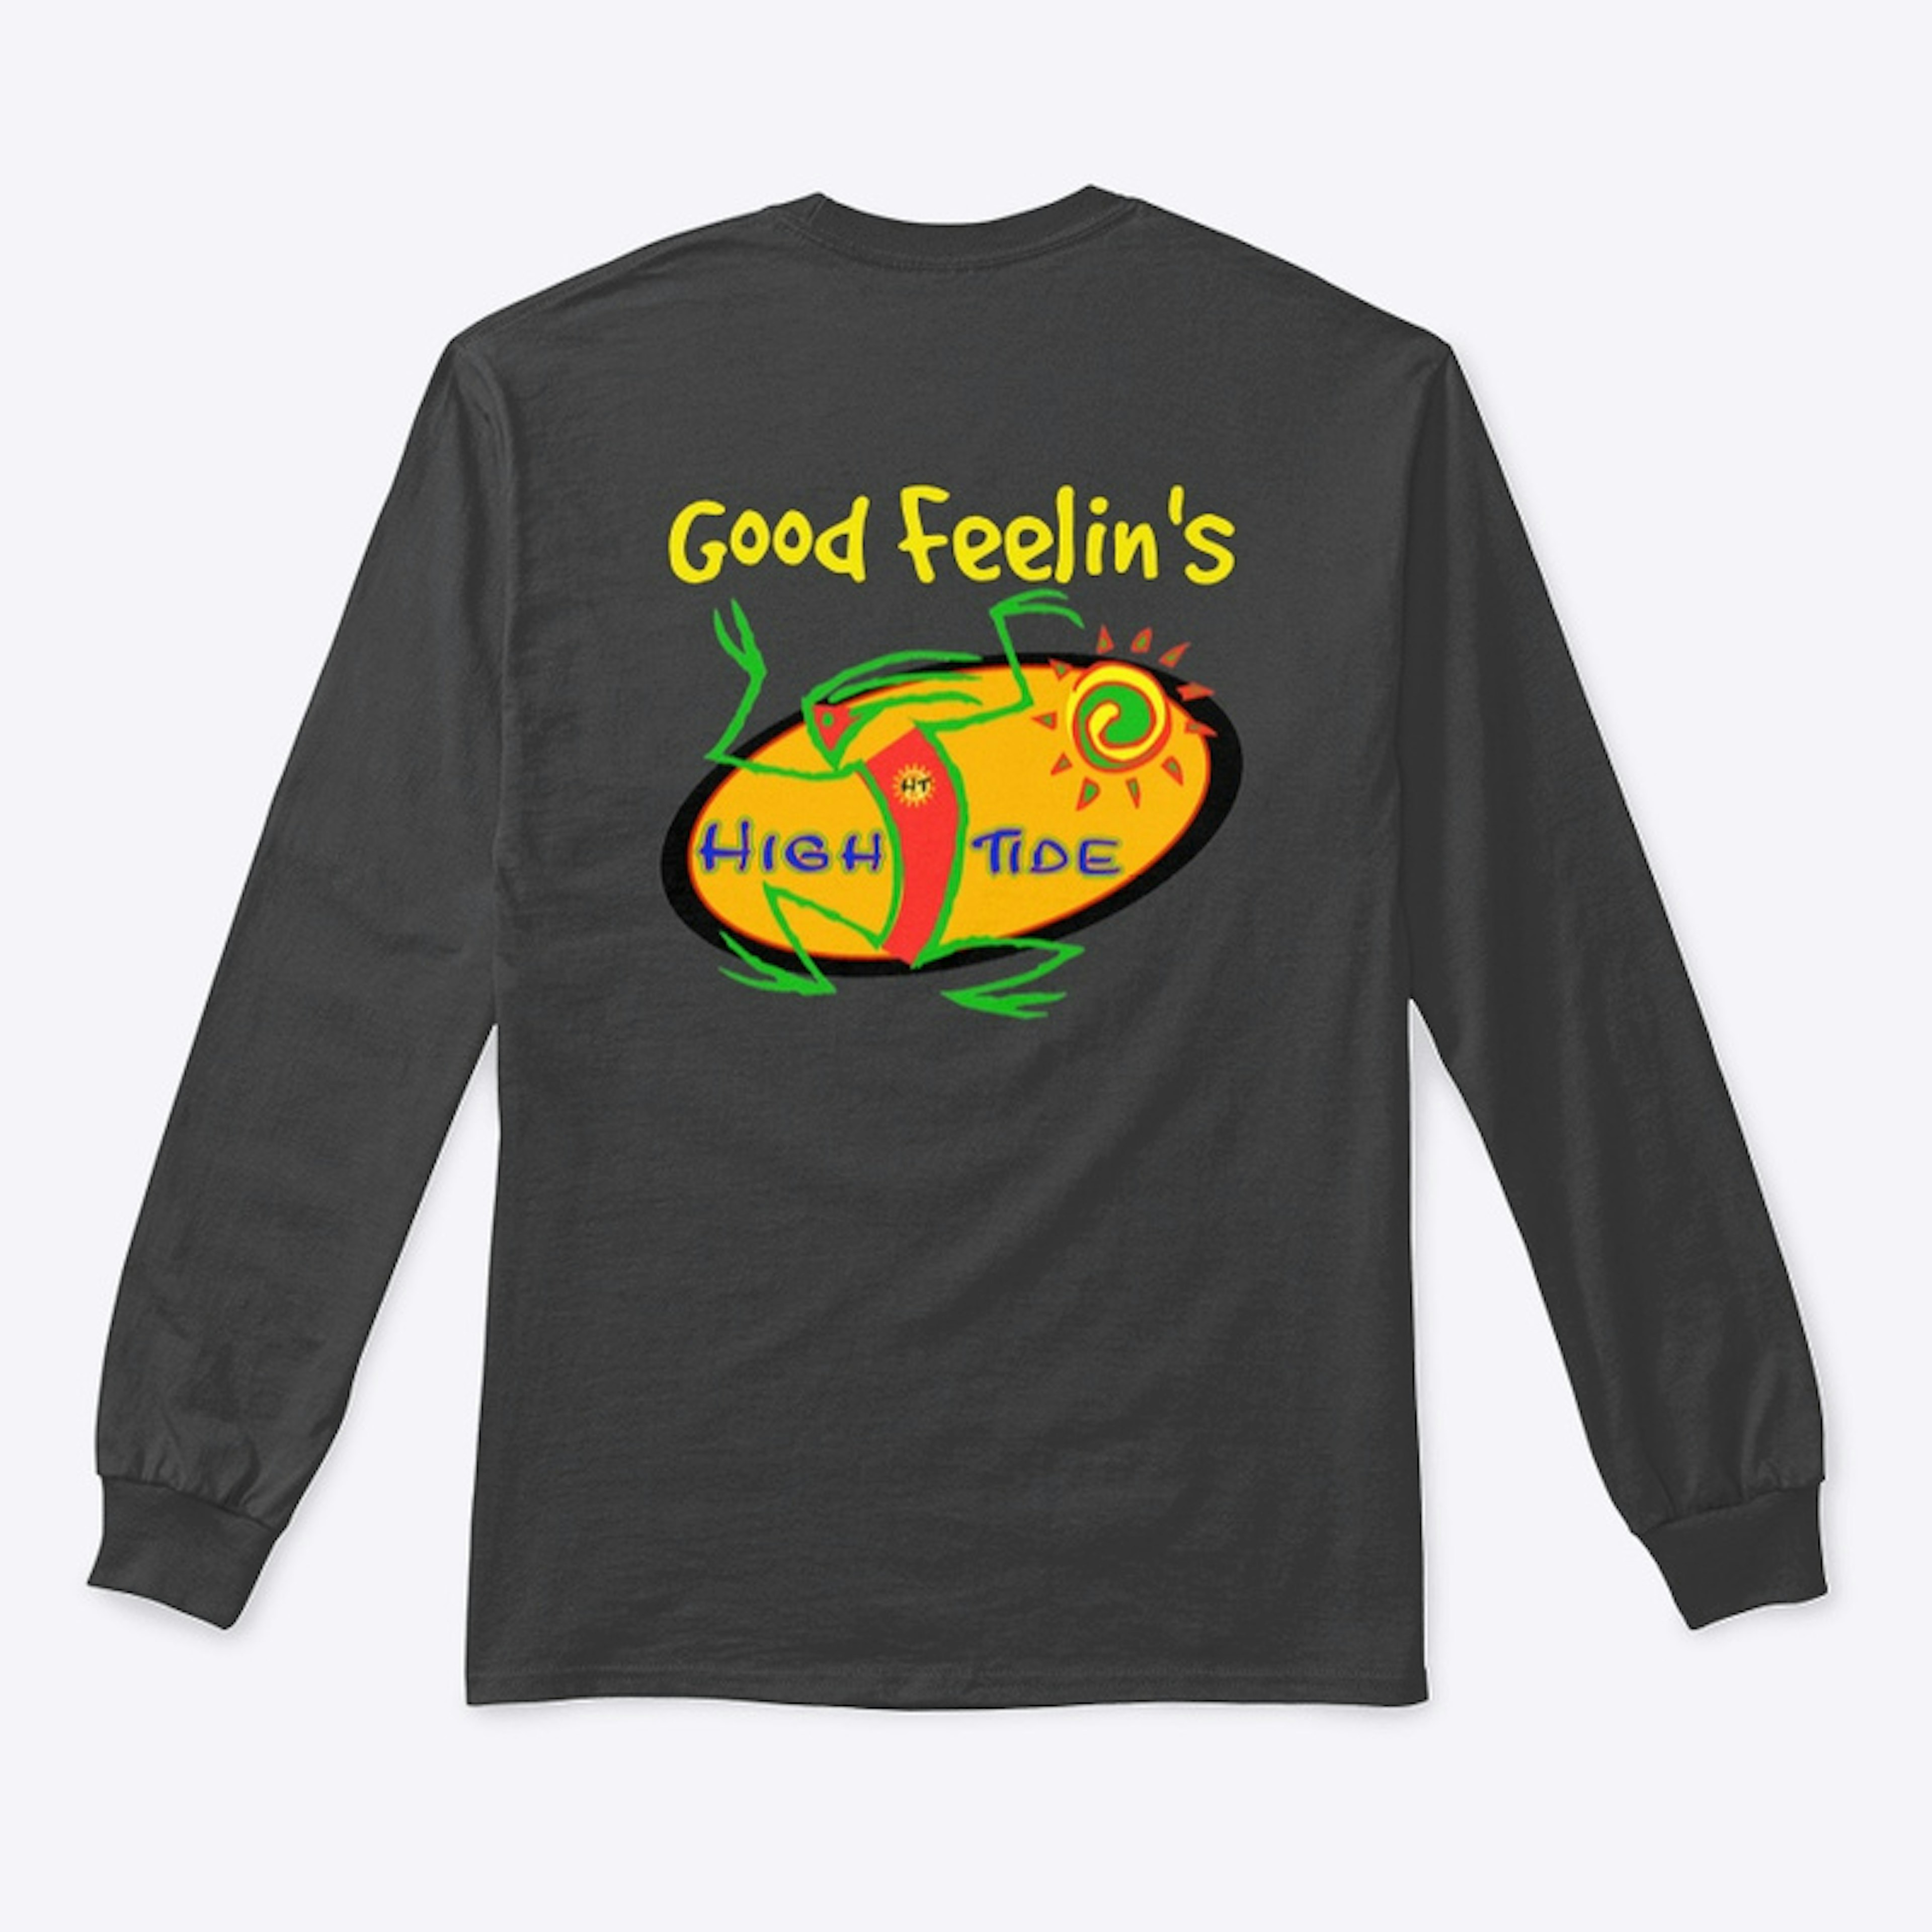 Good Feelin’s - High Tide Band hoodies 